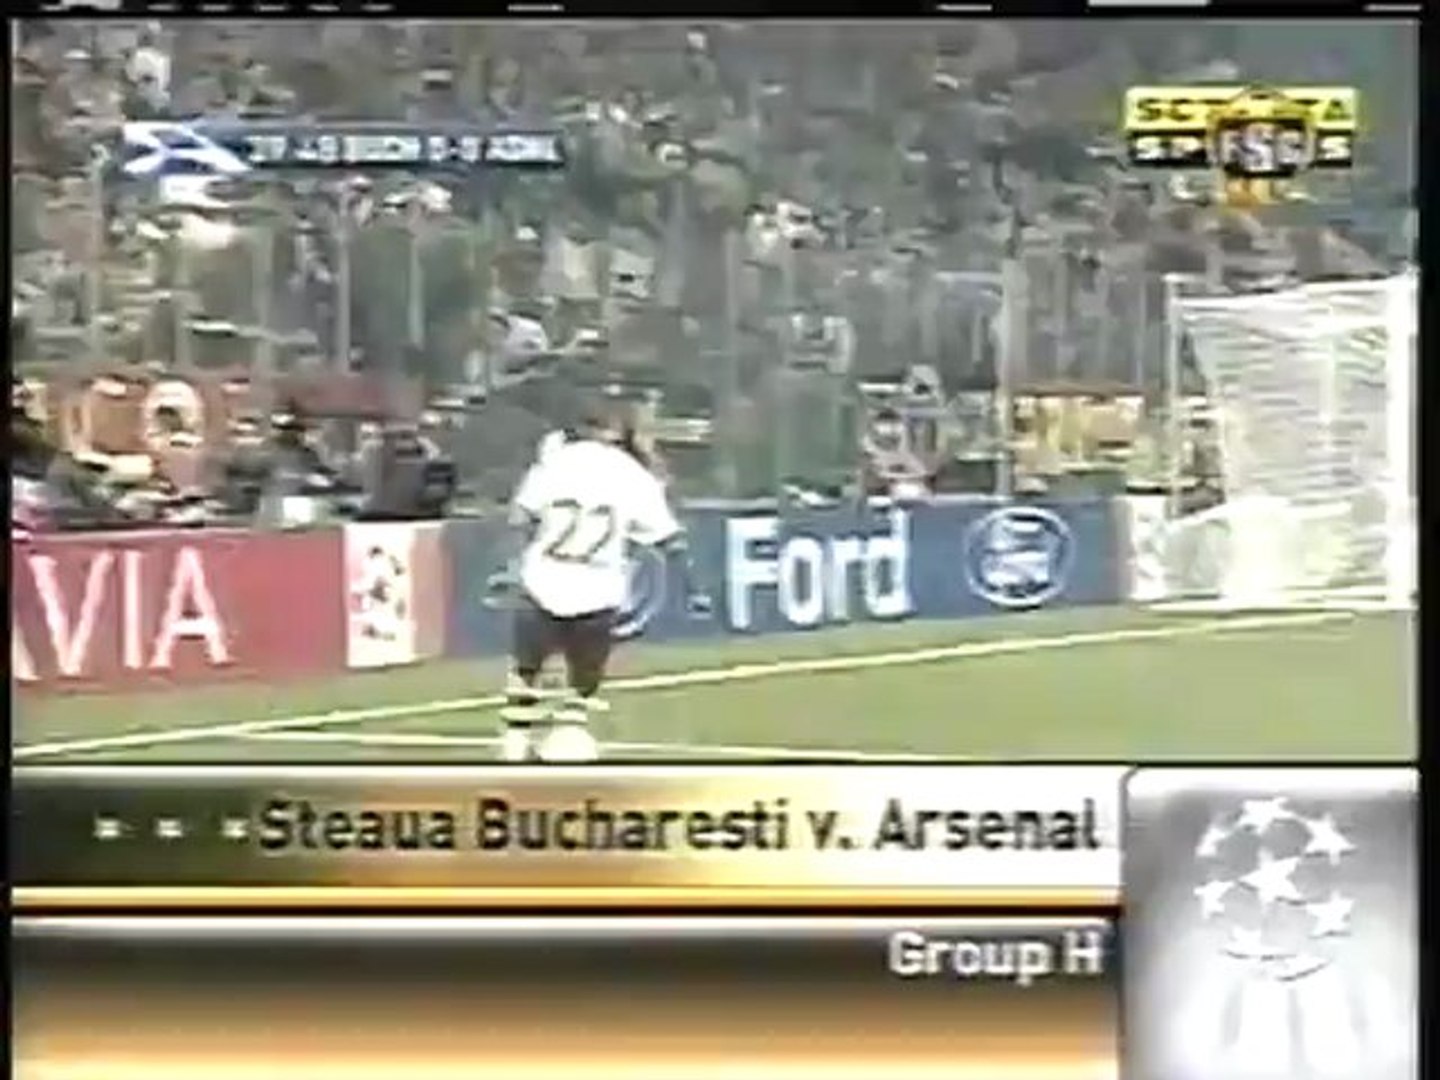 Arsenal 2 - 1 Steaua Bucuresti - Match Report